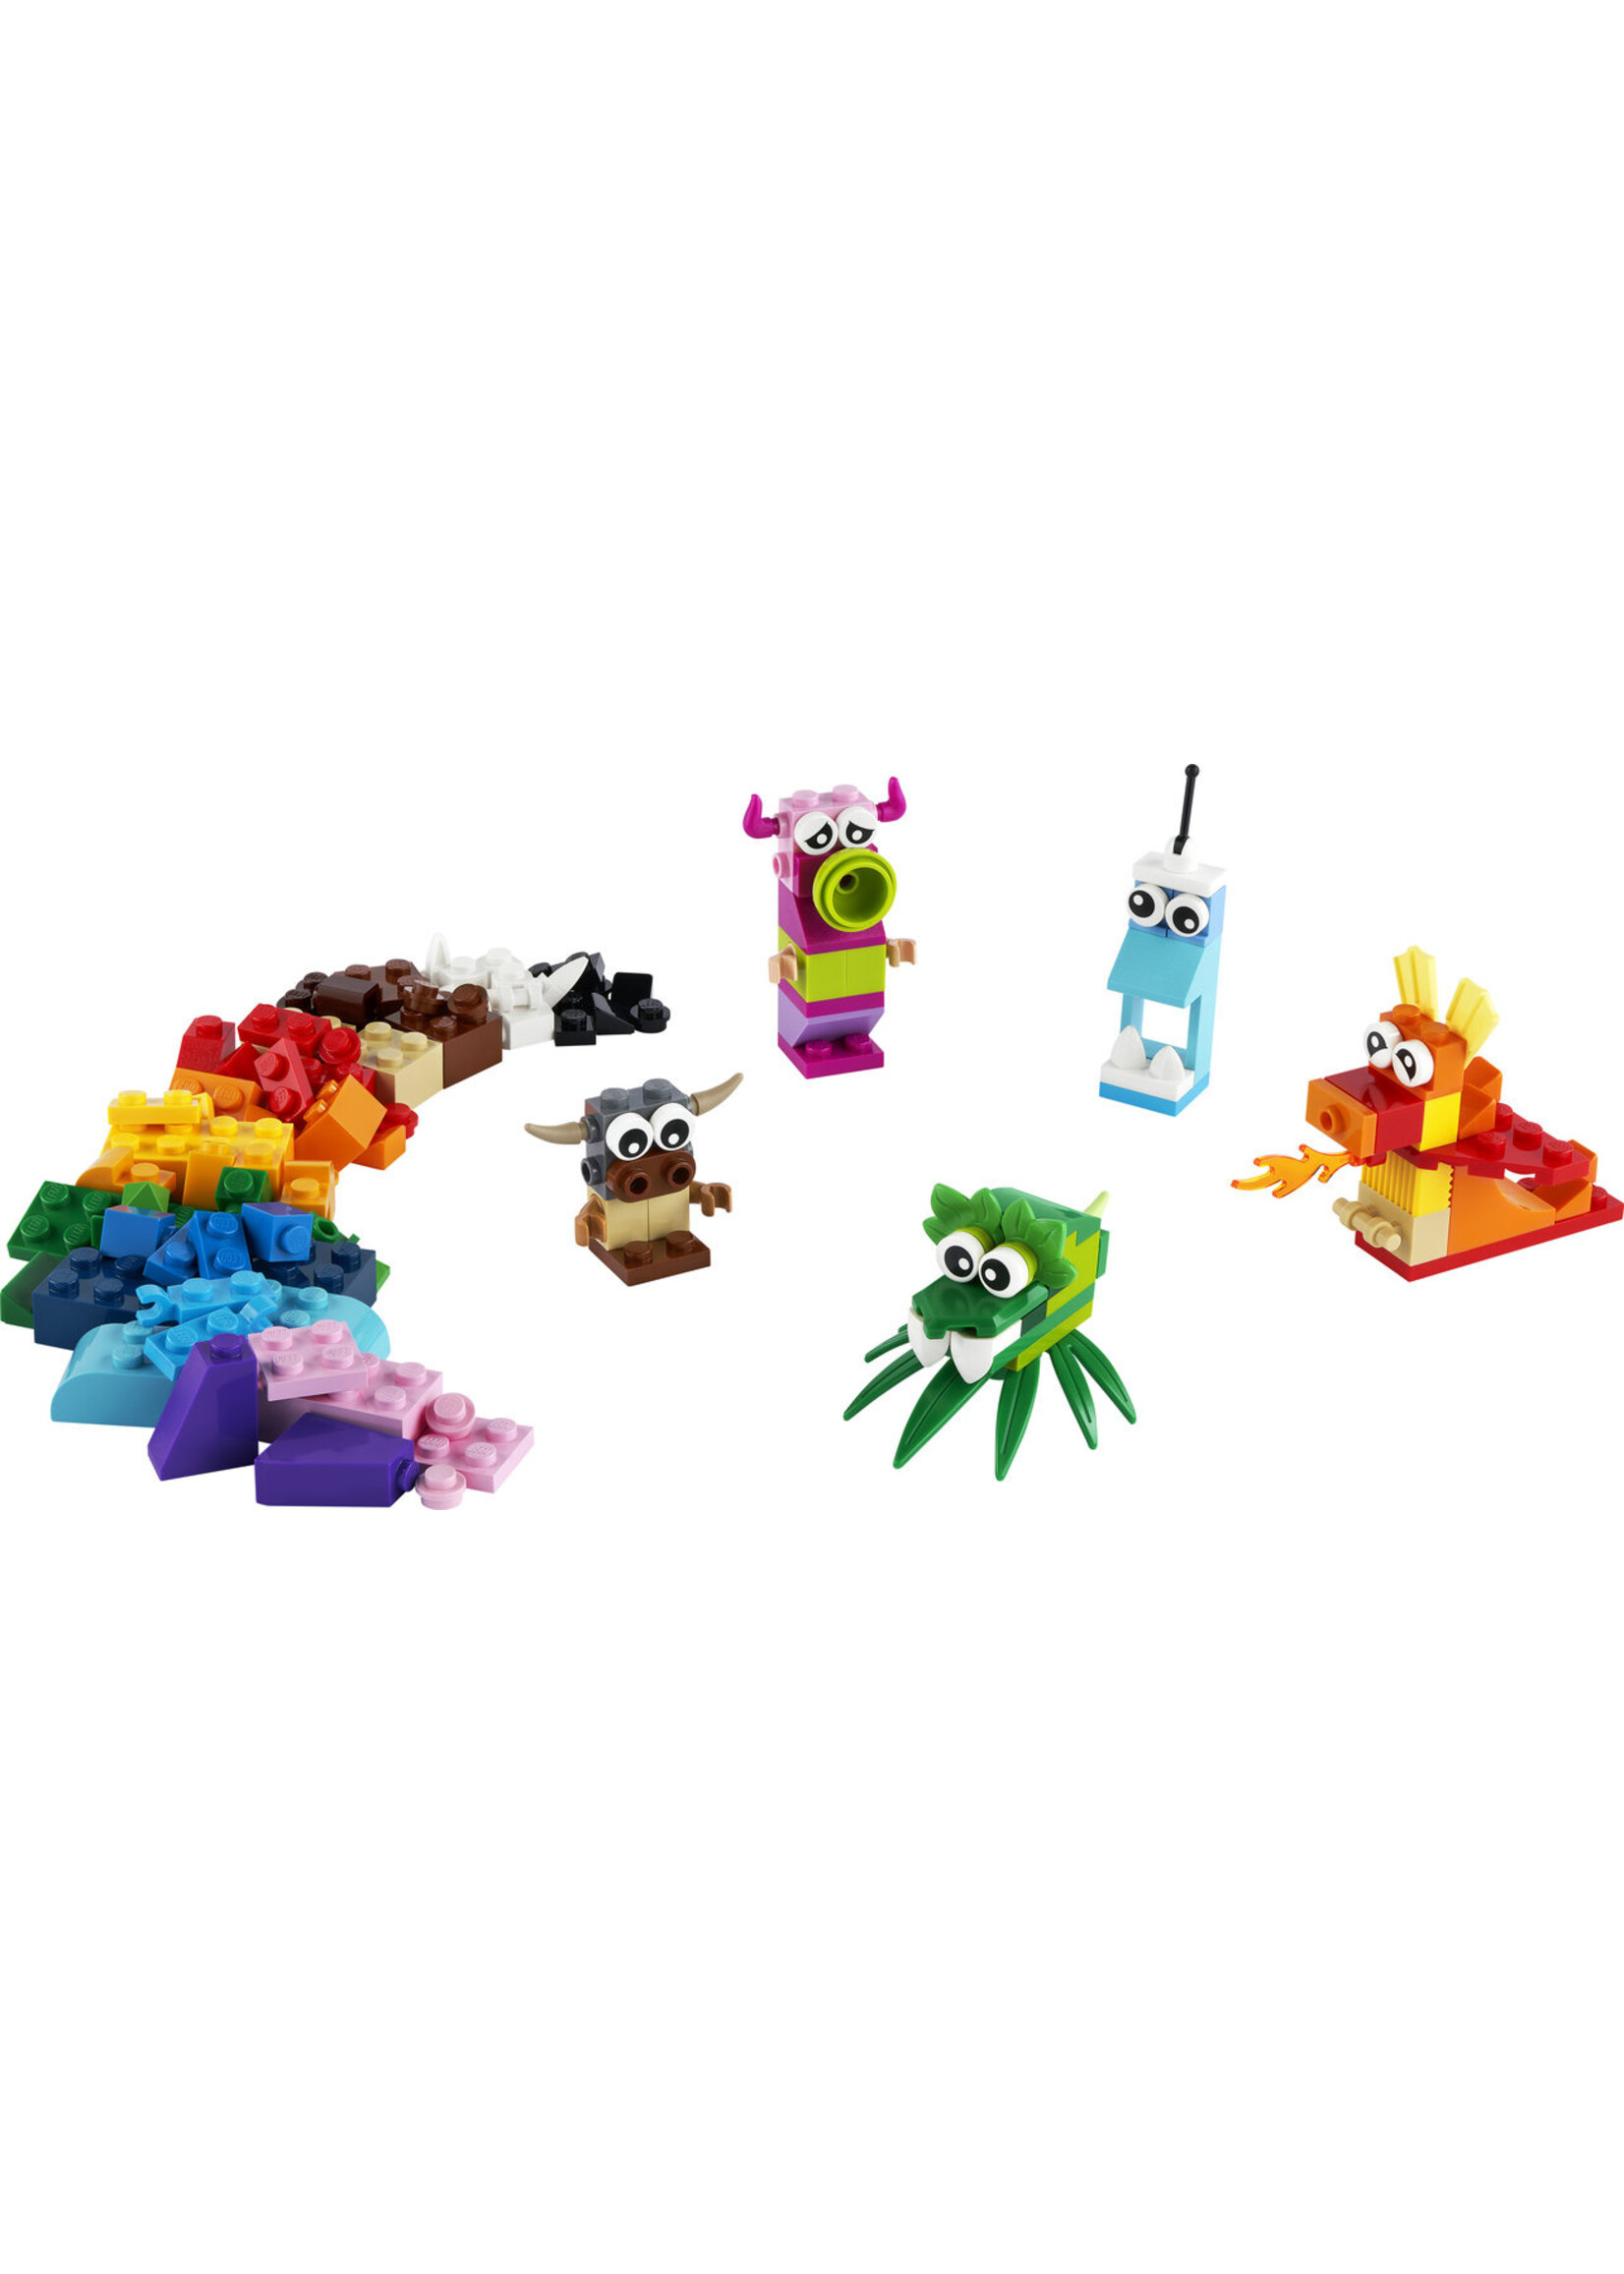 LEGO 11017 - Creative Monsters